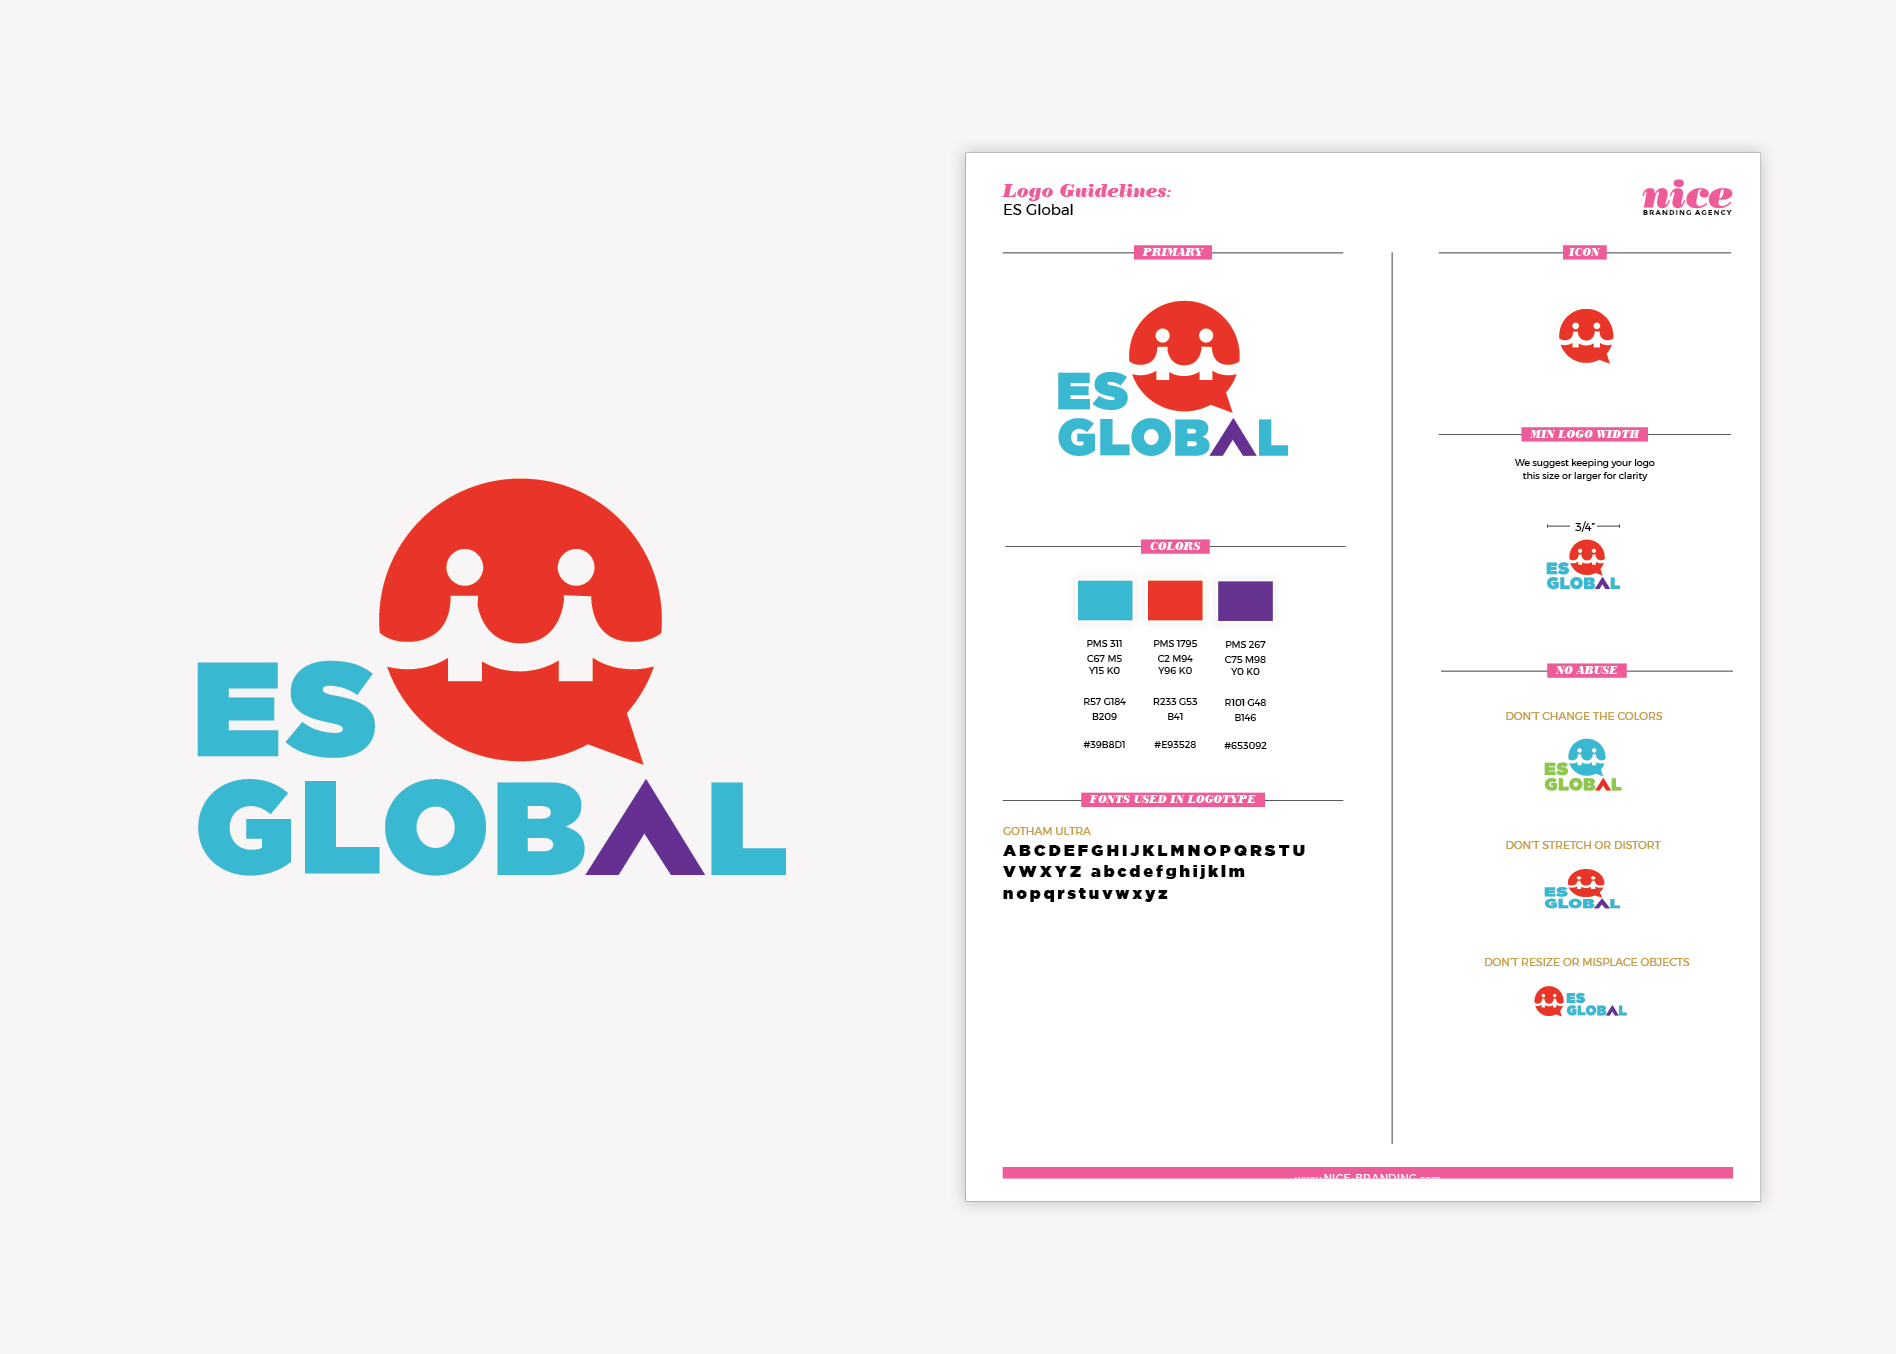 global logo guidelines